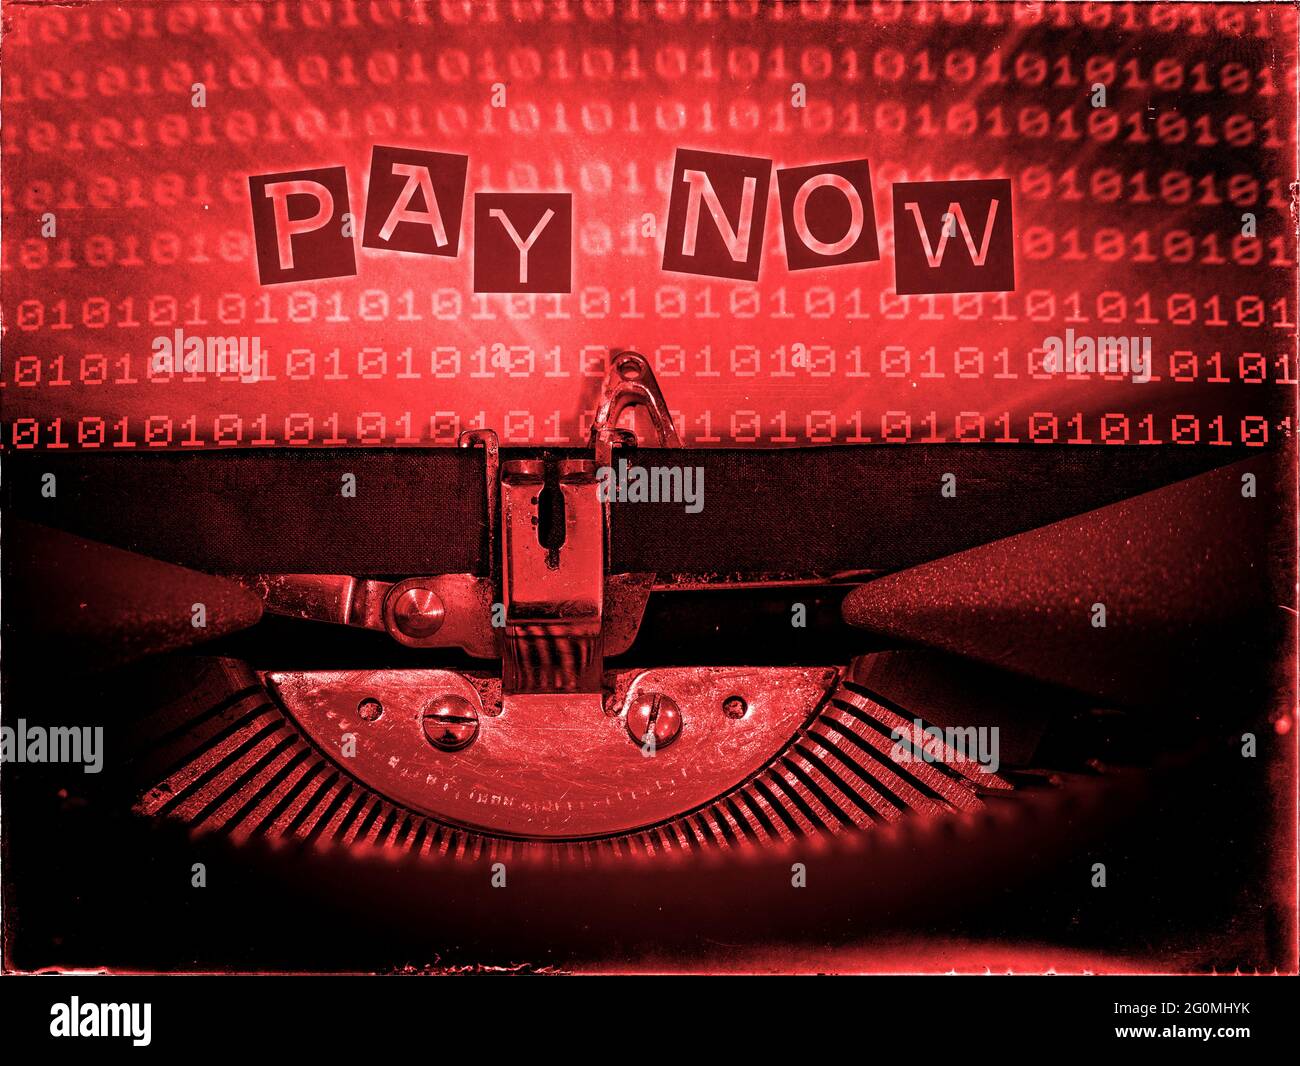 Pay Now, Typewriter, Ransomware, Retrofuturism Stock Photo